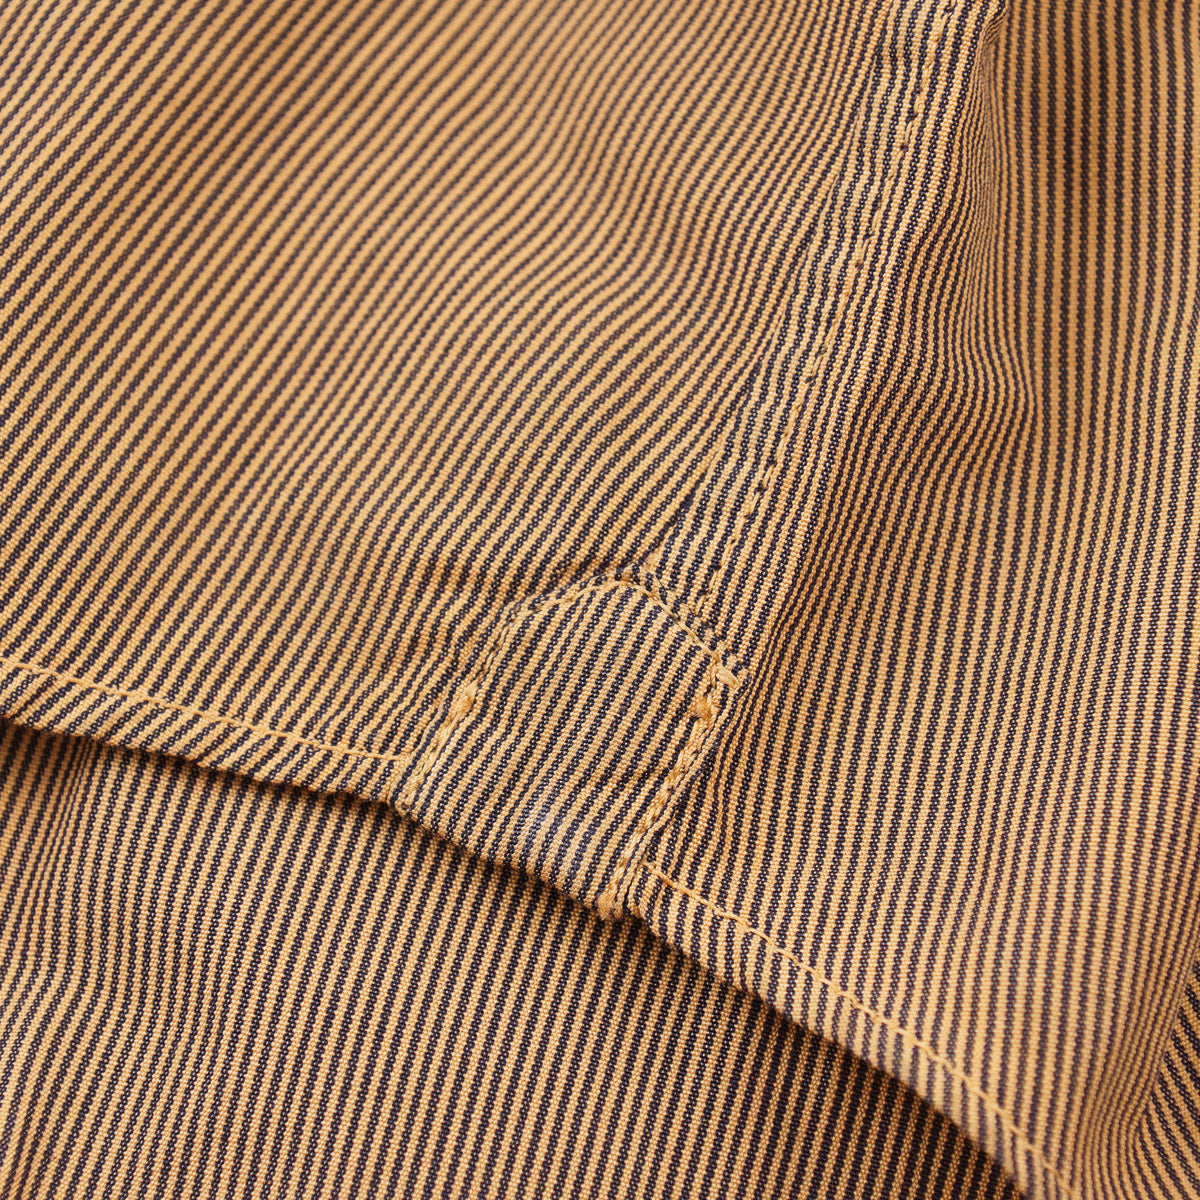 Boglioli Slim-Fit Cotton Dress Shirt - Top Shelf Apparel